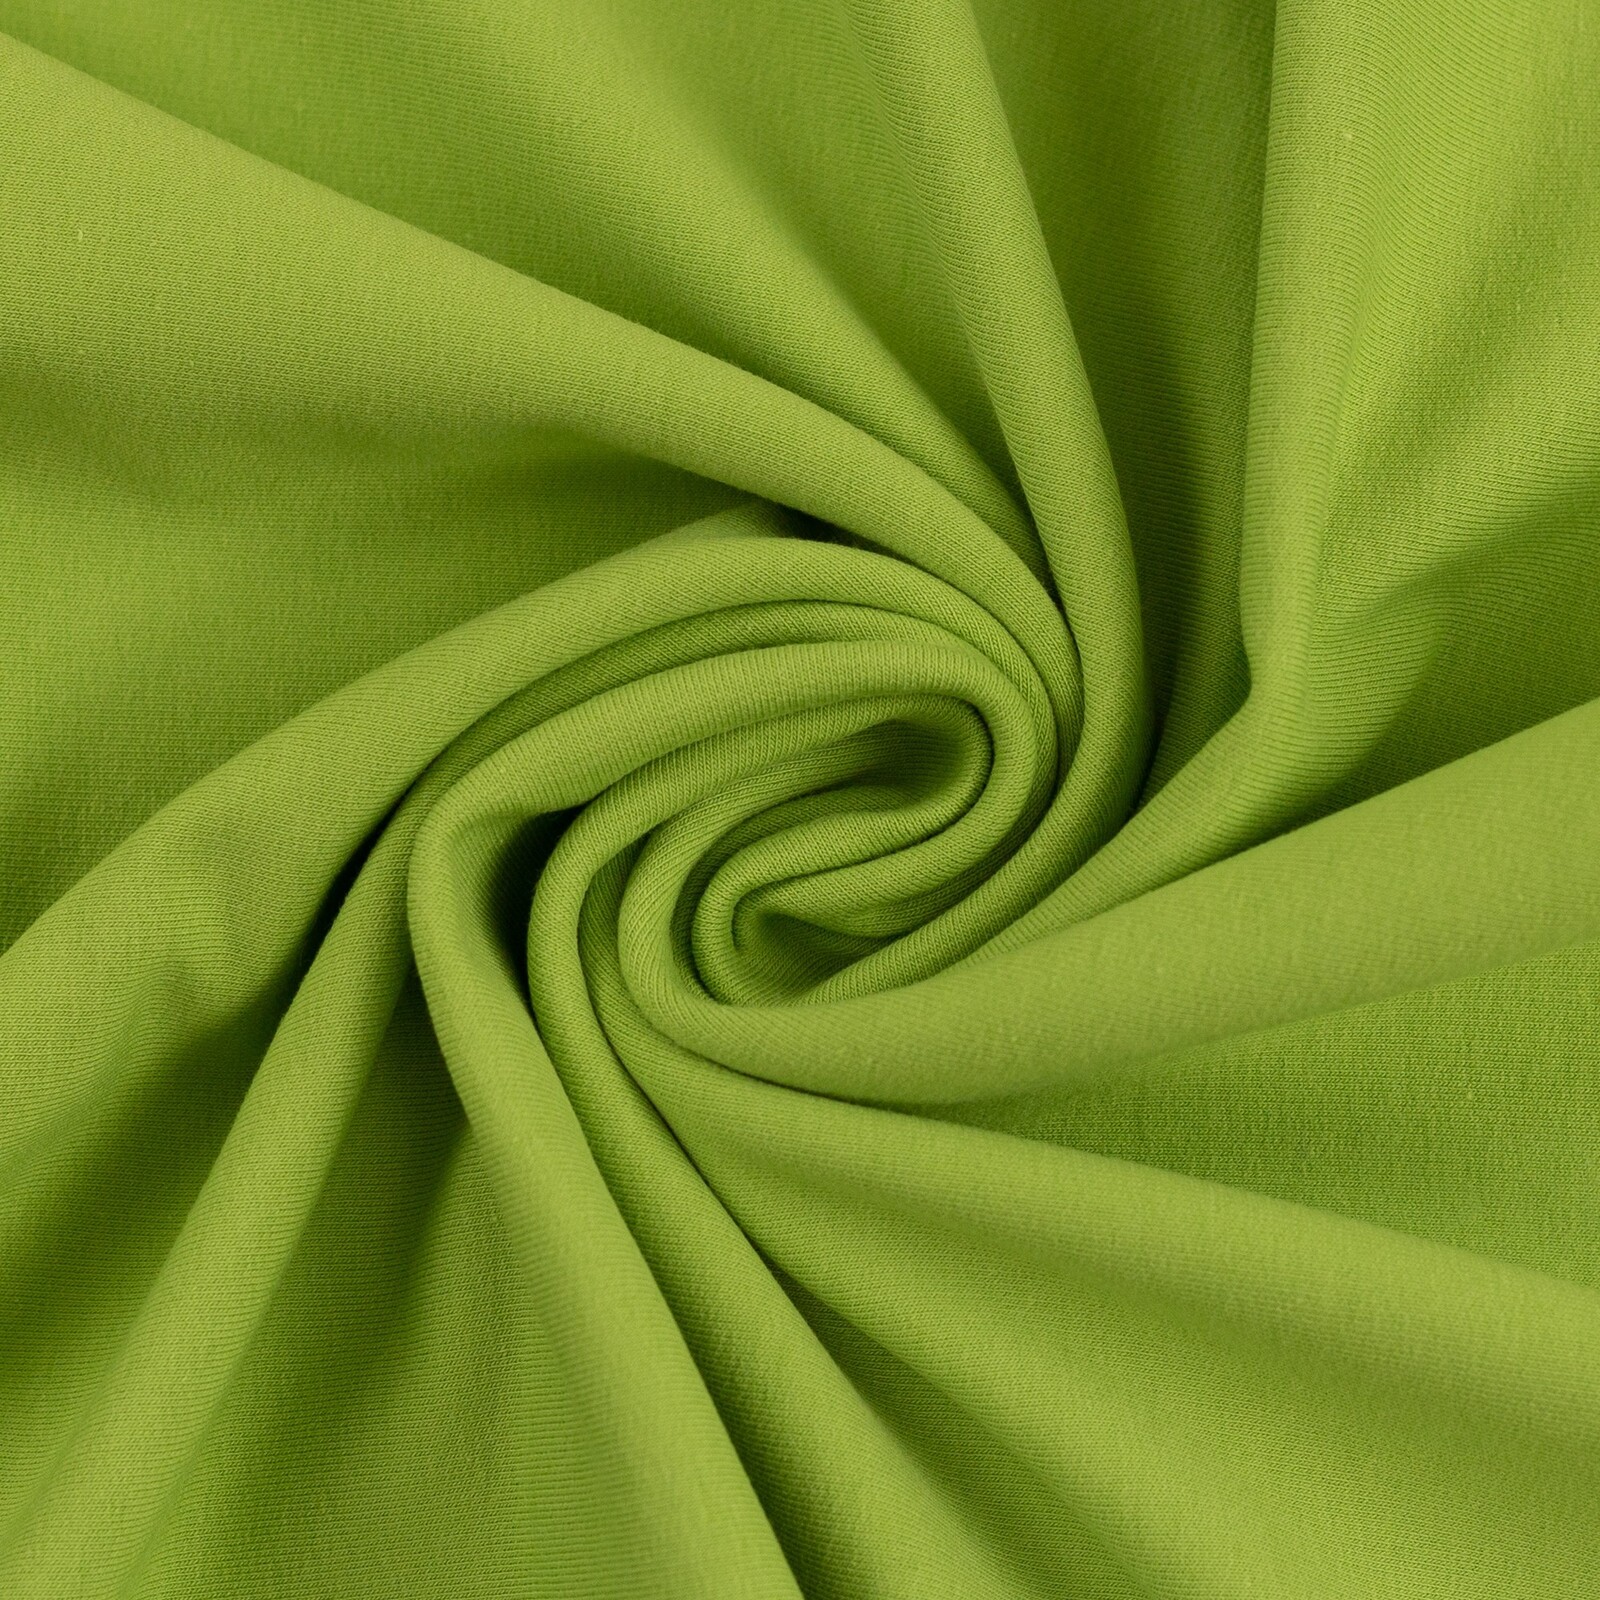 European Cotton Elastane Lycra Jersey, Solid Kiwi Green Knit Fabric